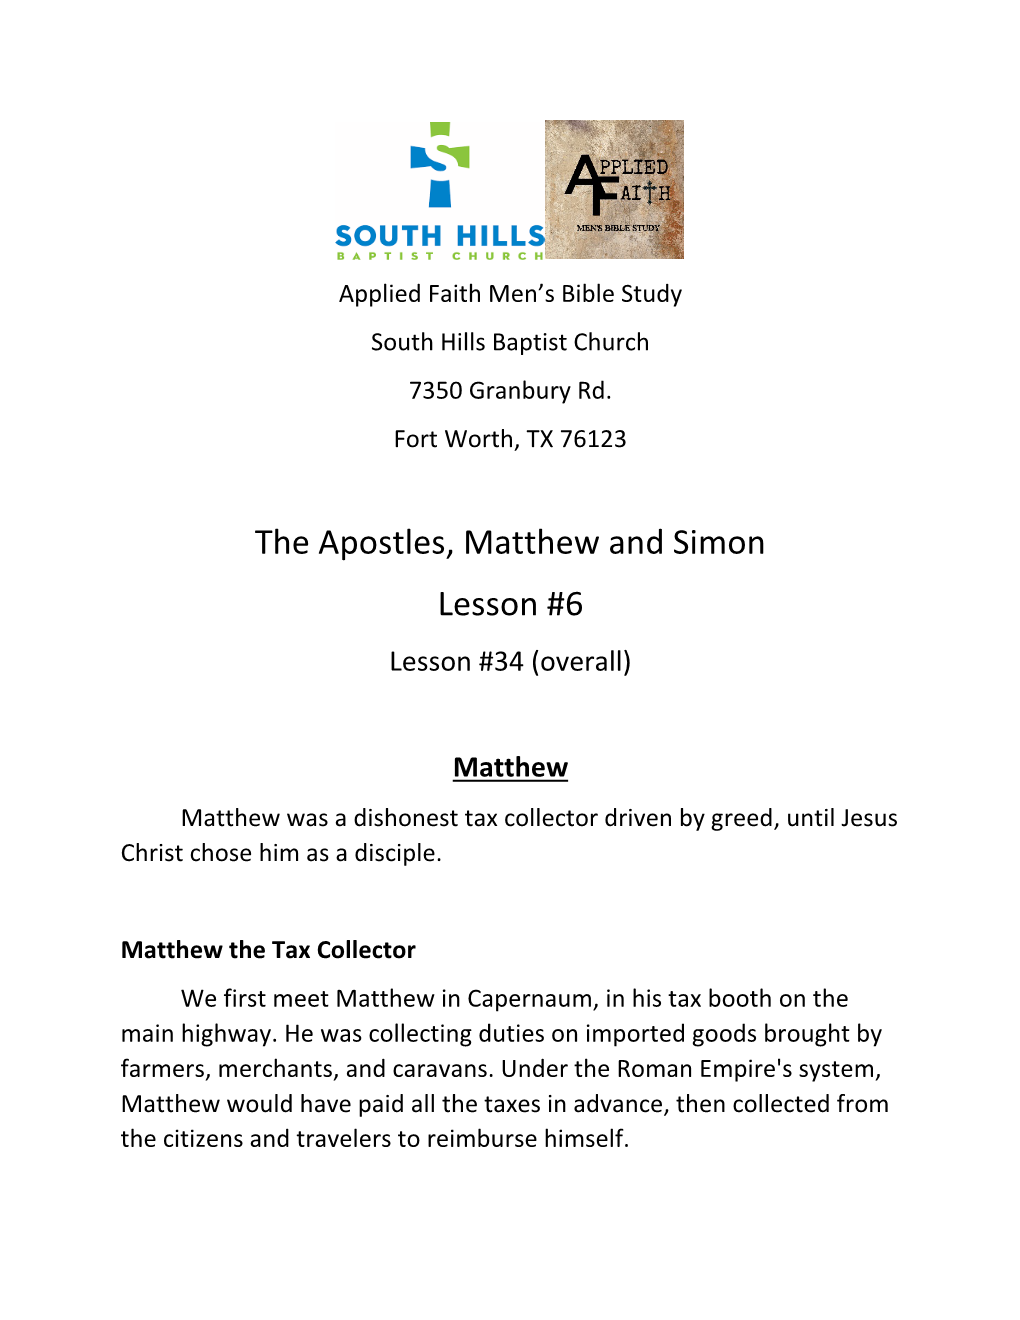 The Apostles, Matthew and Simon Lesson #6 Lesson #34 (Overall)